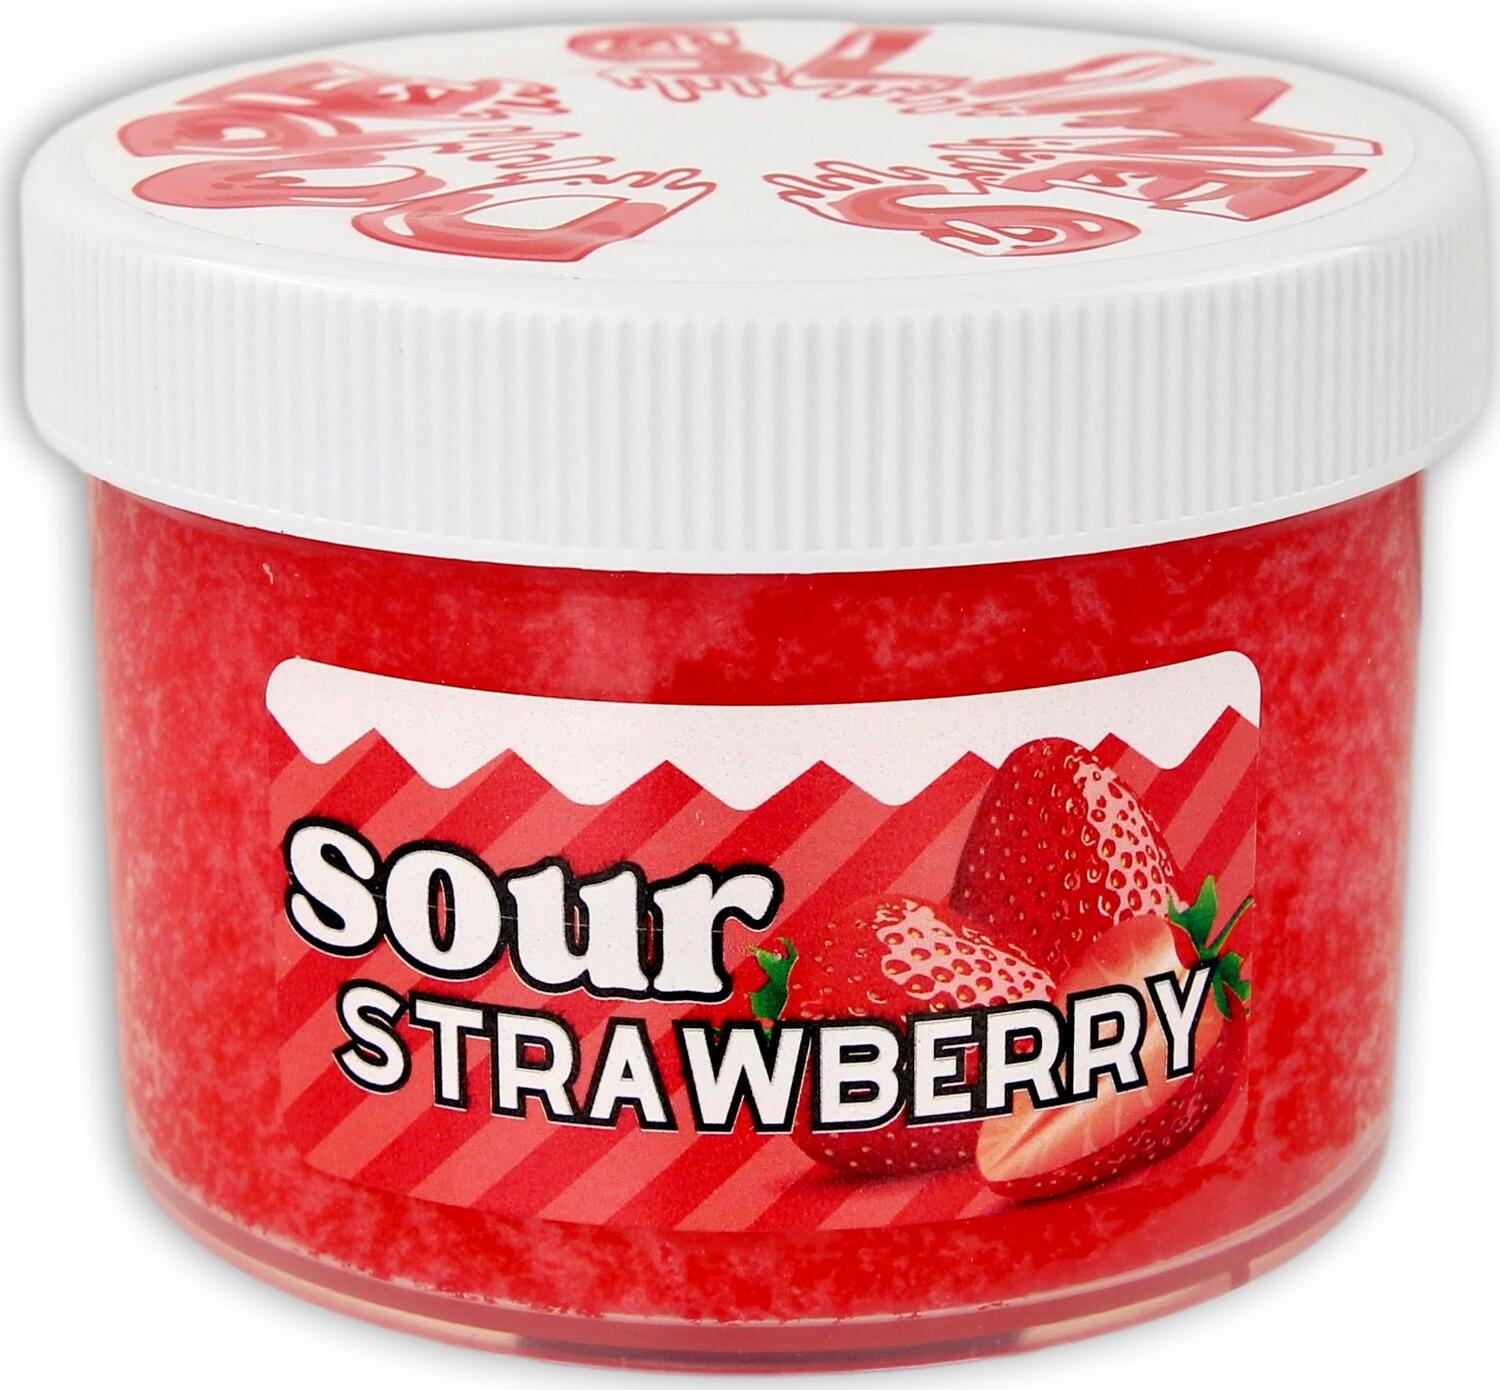 Sour Strawberry